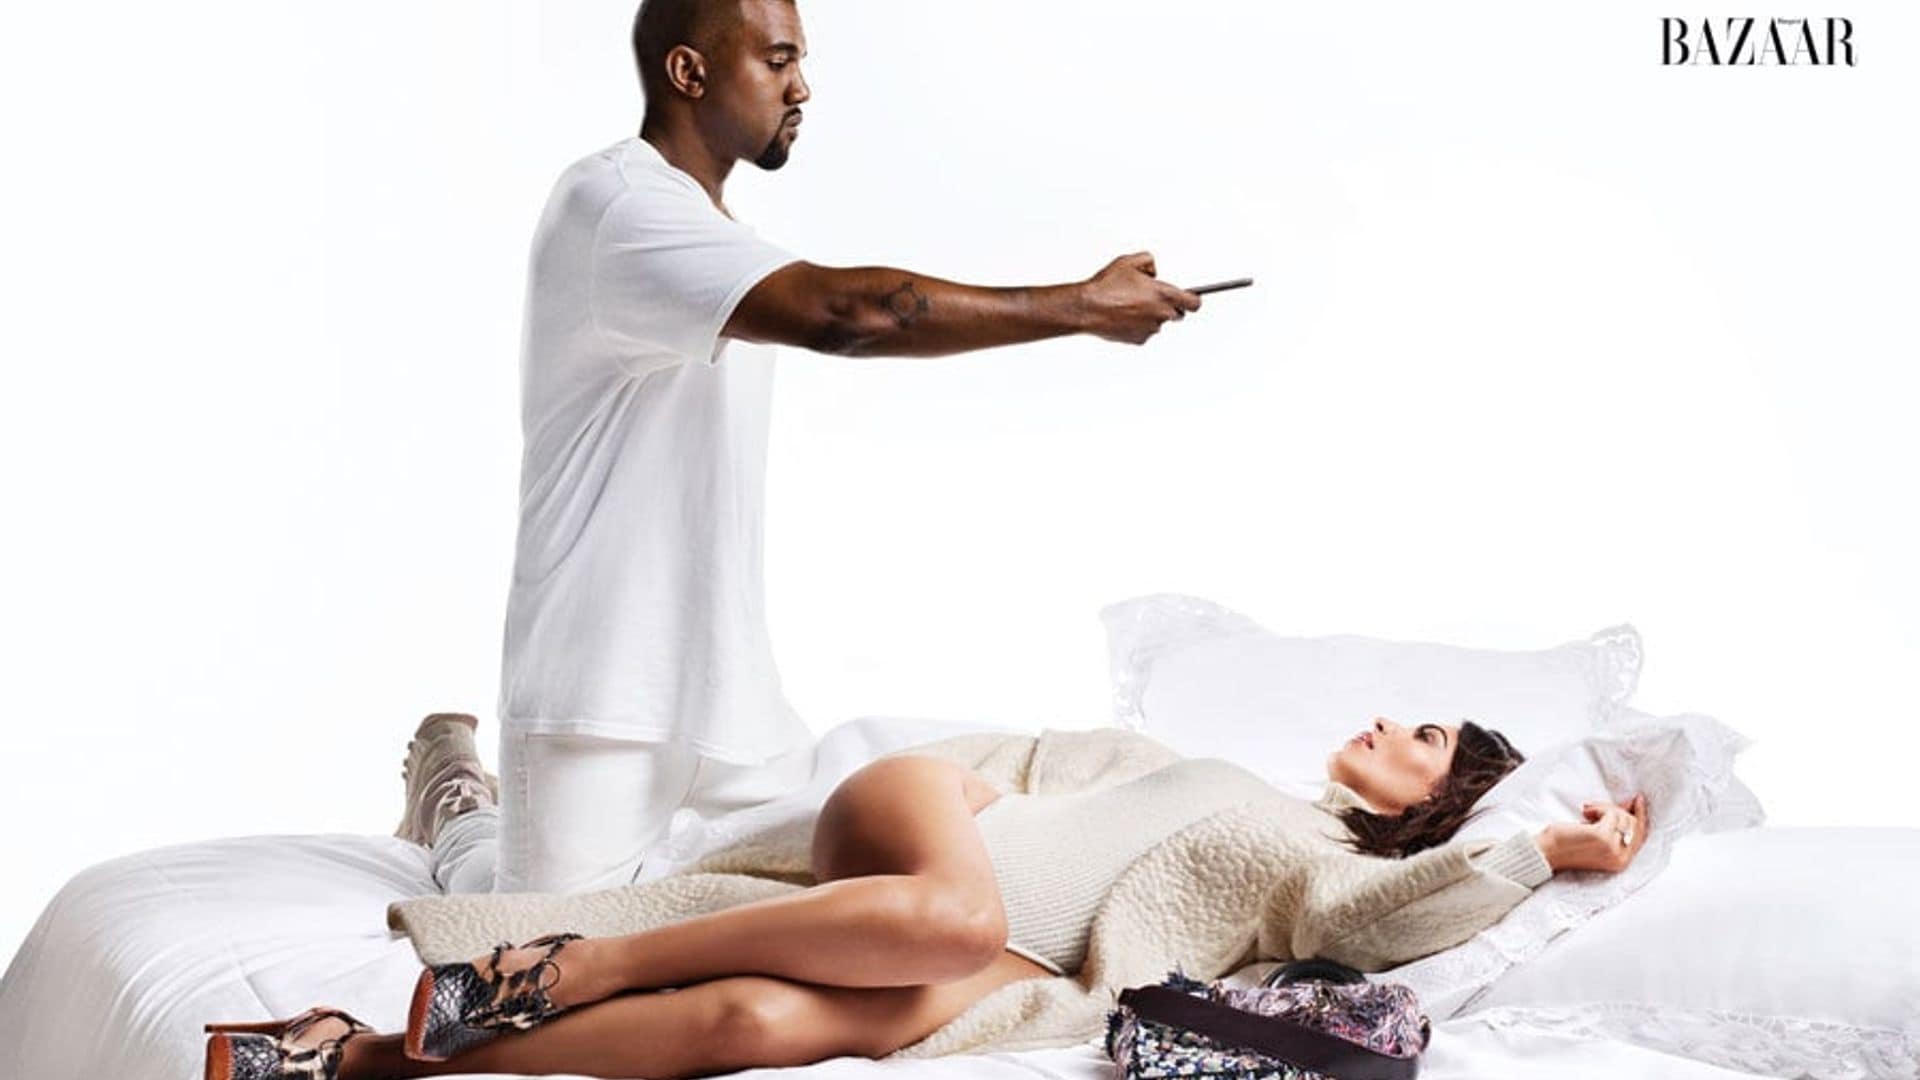 Kanye likened his wife's nude selfies to works of art.
<br>
Photo: Karl Lagerfeld